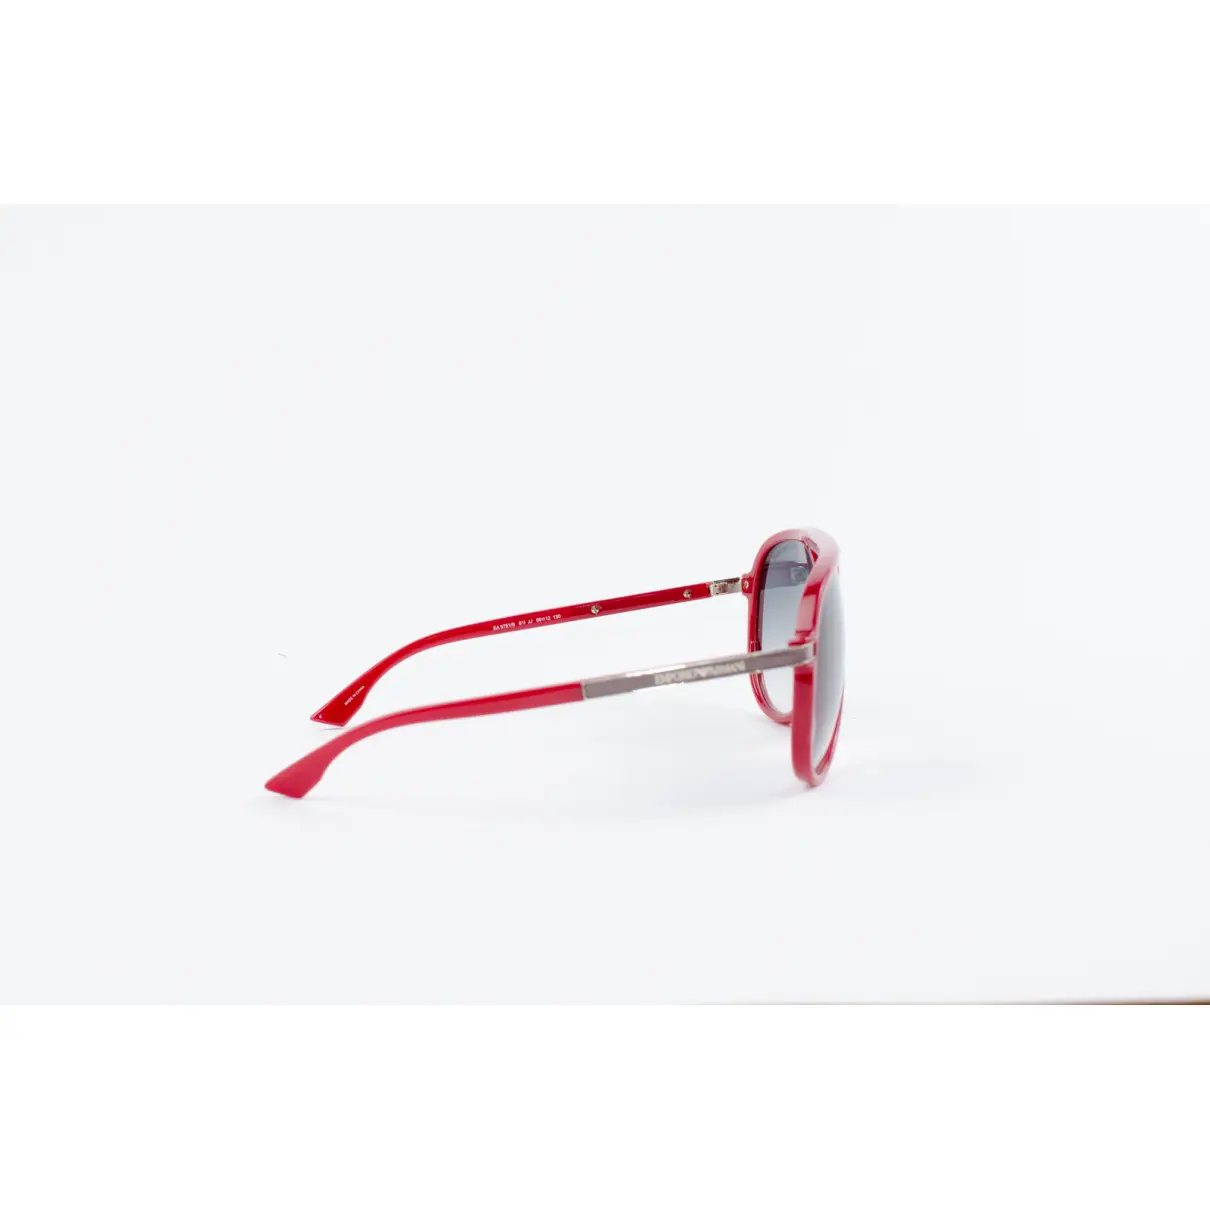 Luxury Emporio Armani Sunglasses Men